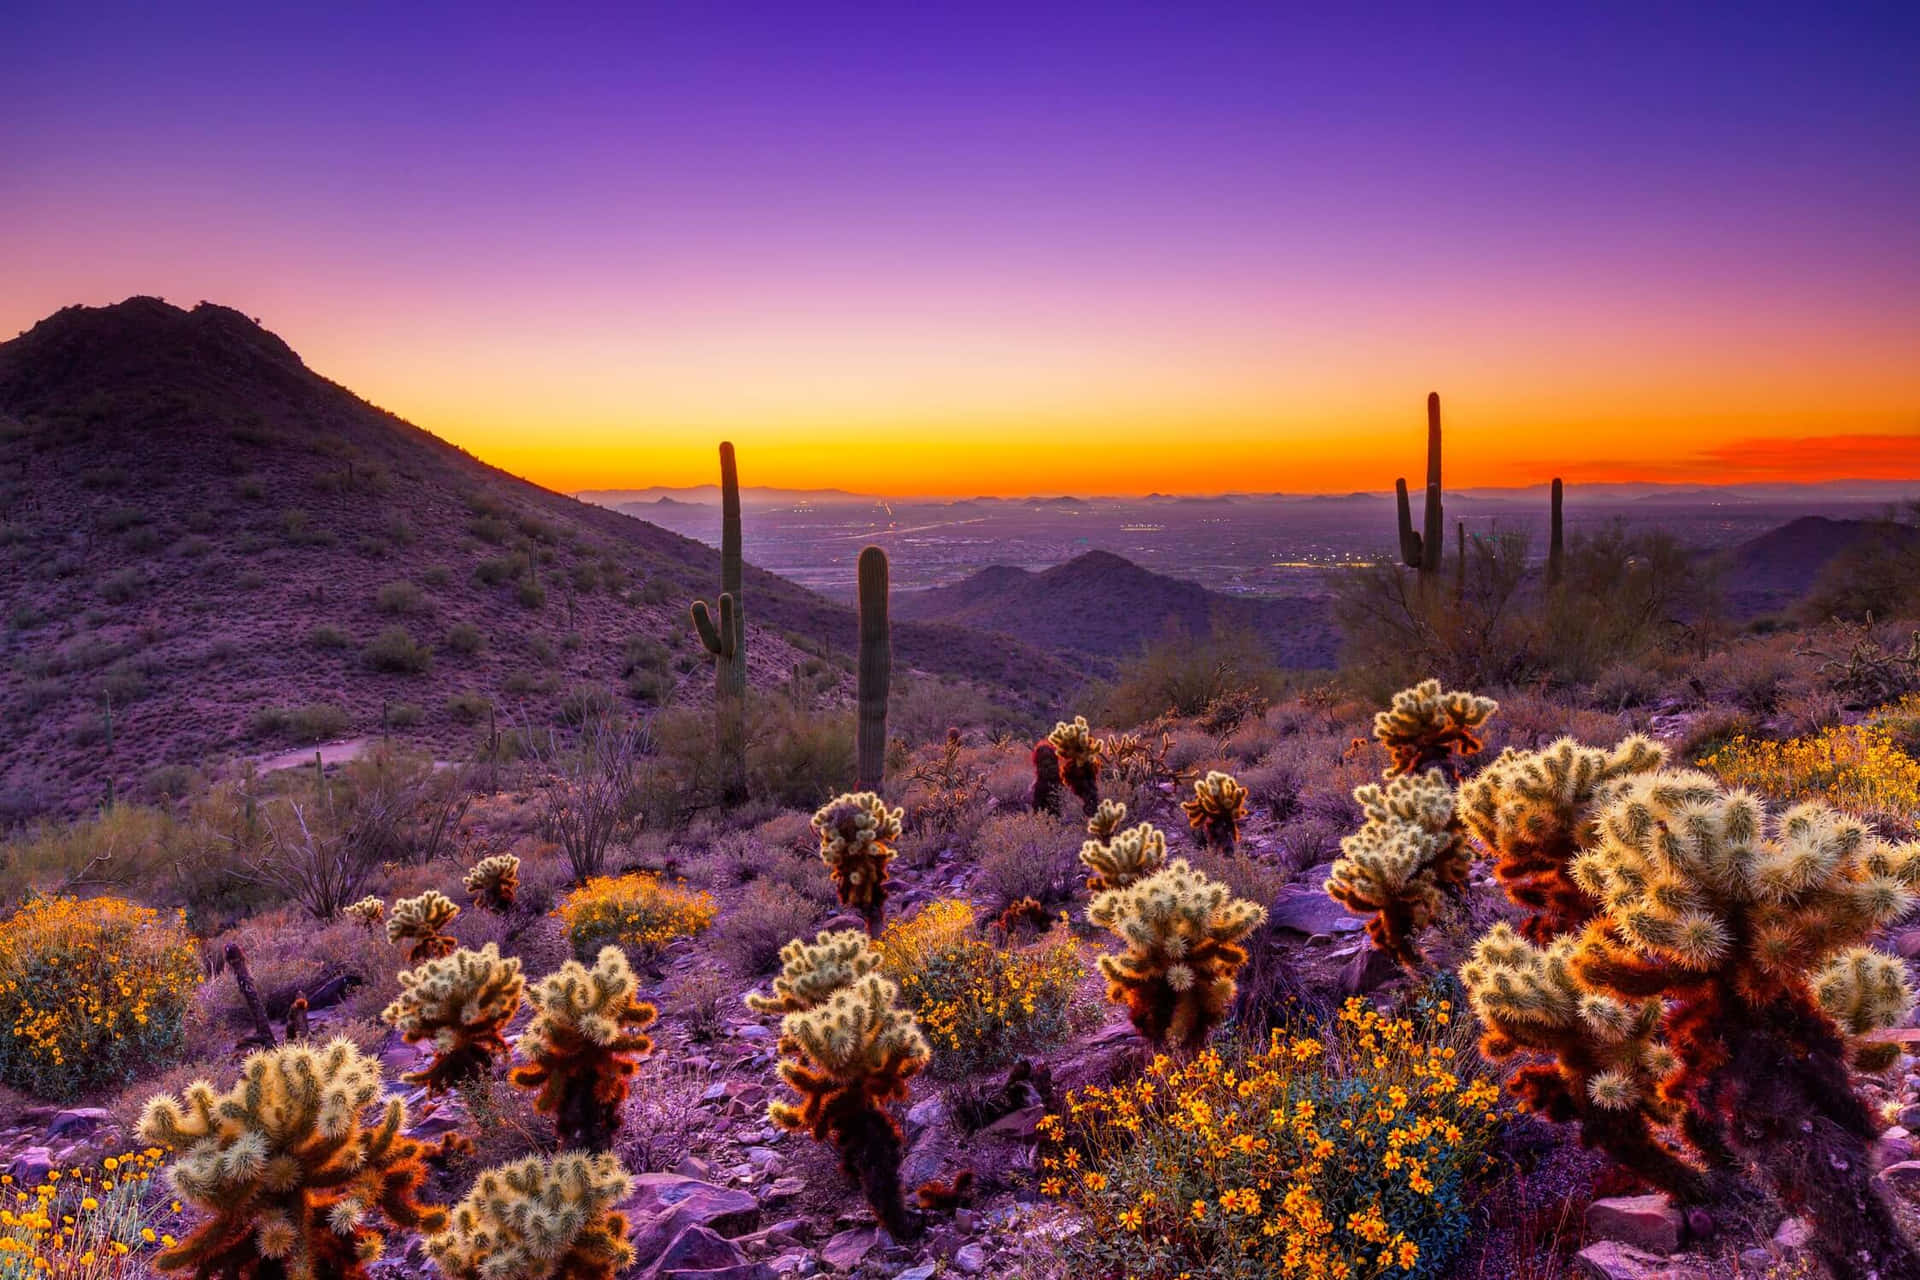 “Explore the Wild Beauty of Arizona”